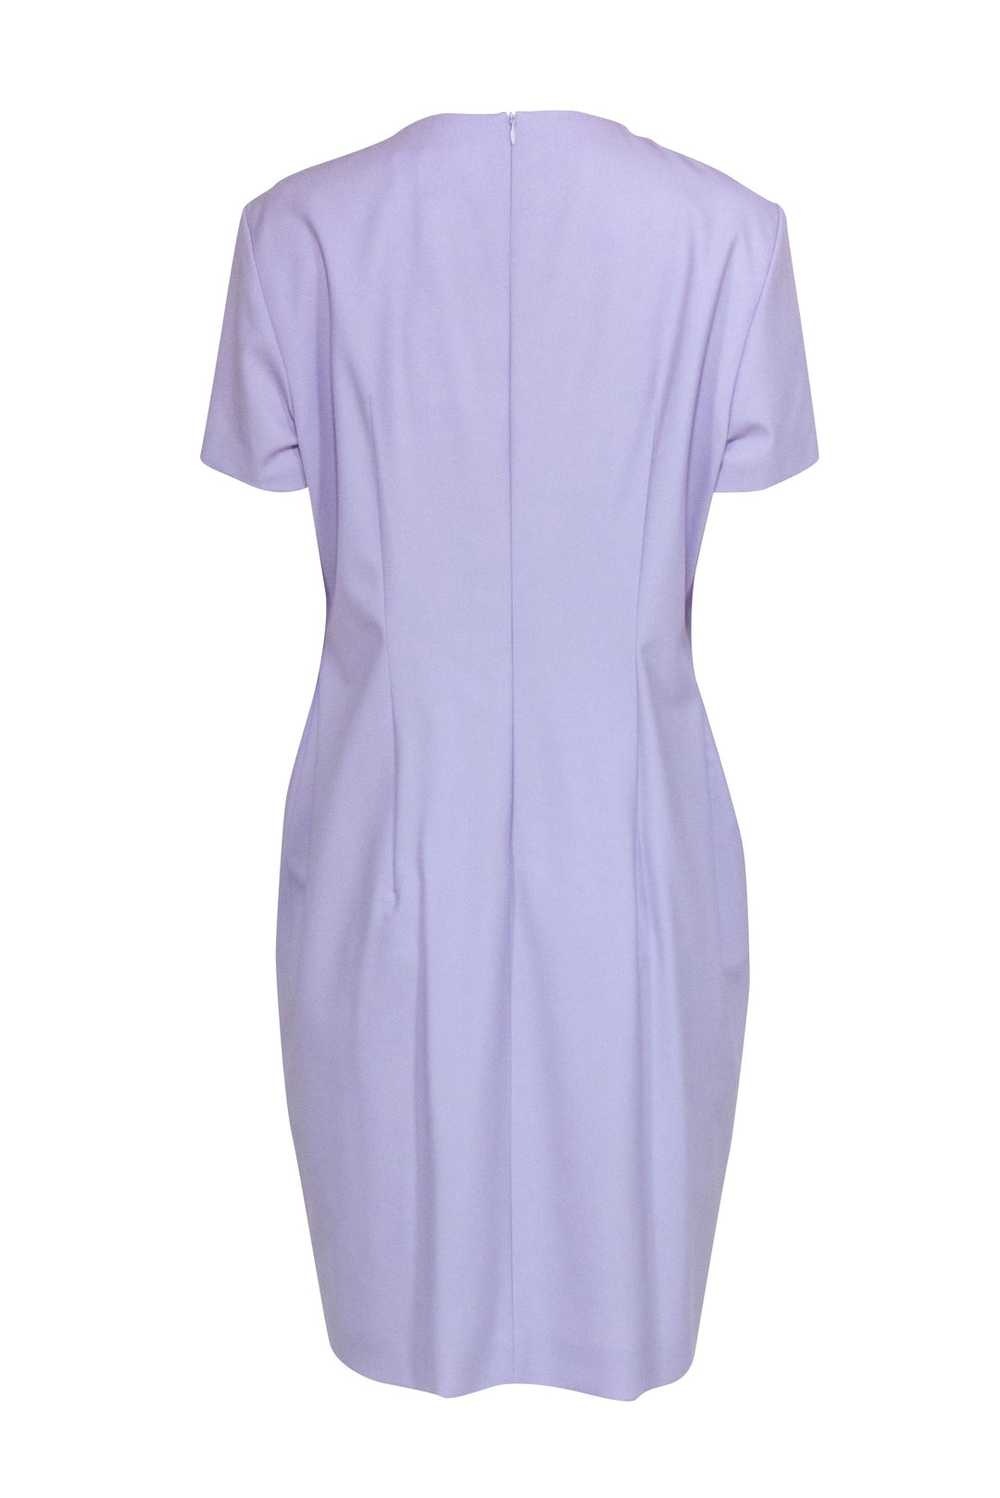 Hugo Boss - Lavender Short Sleeve Shift Dress Sz … - image 3